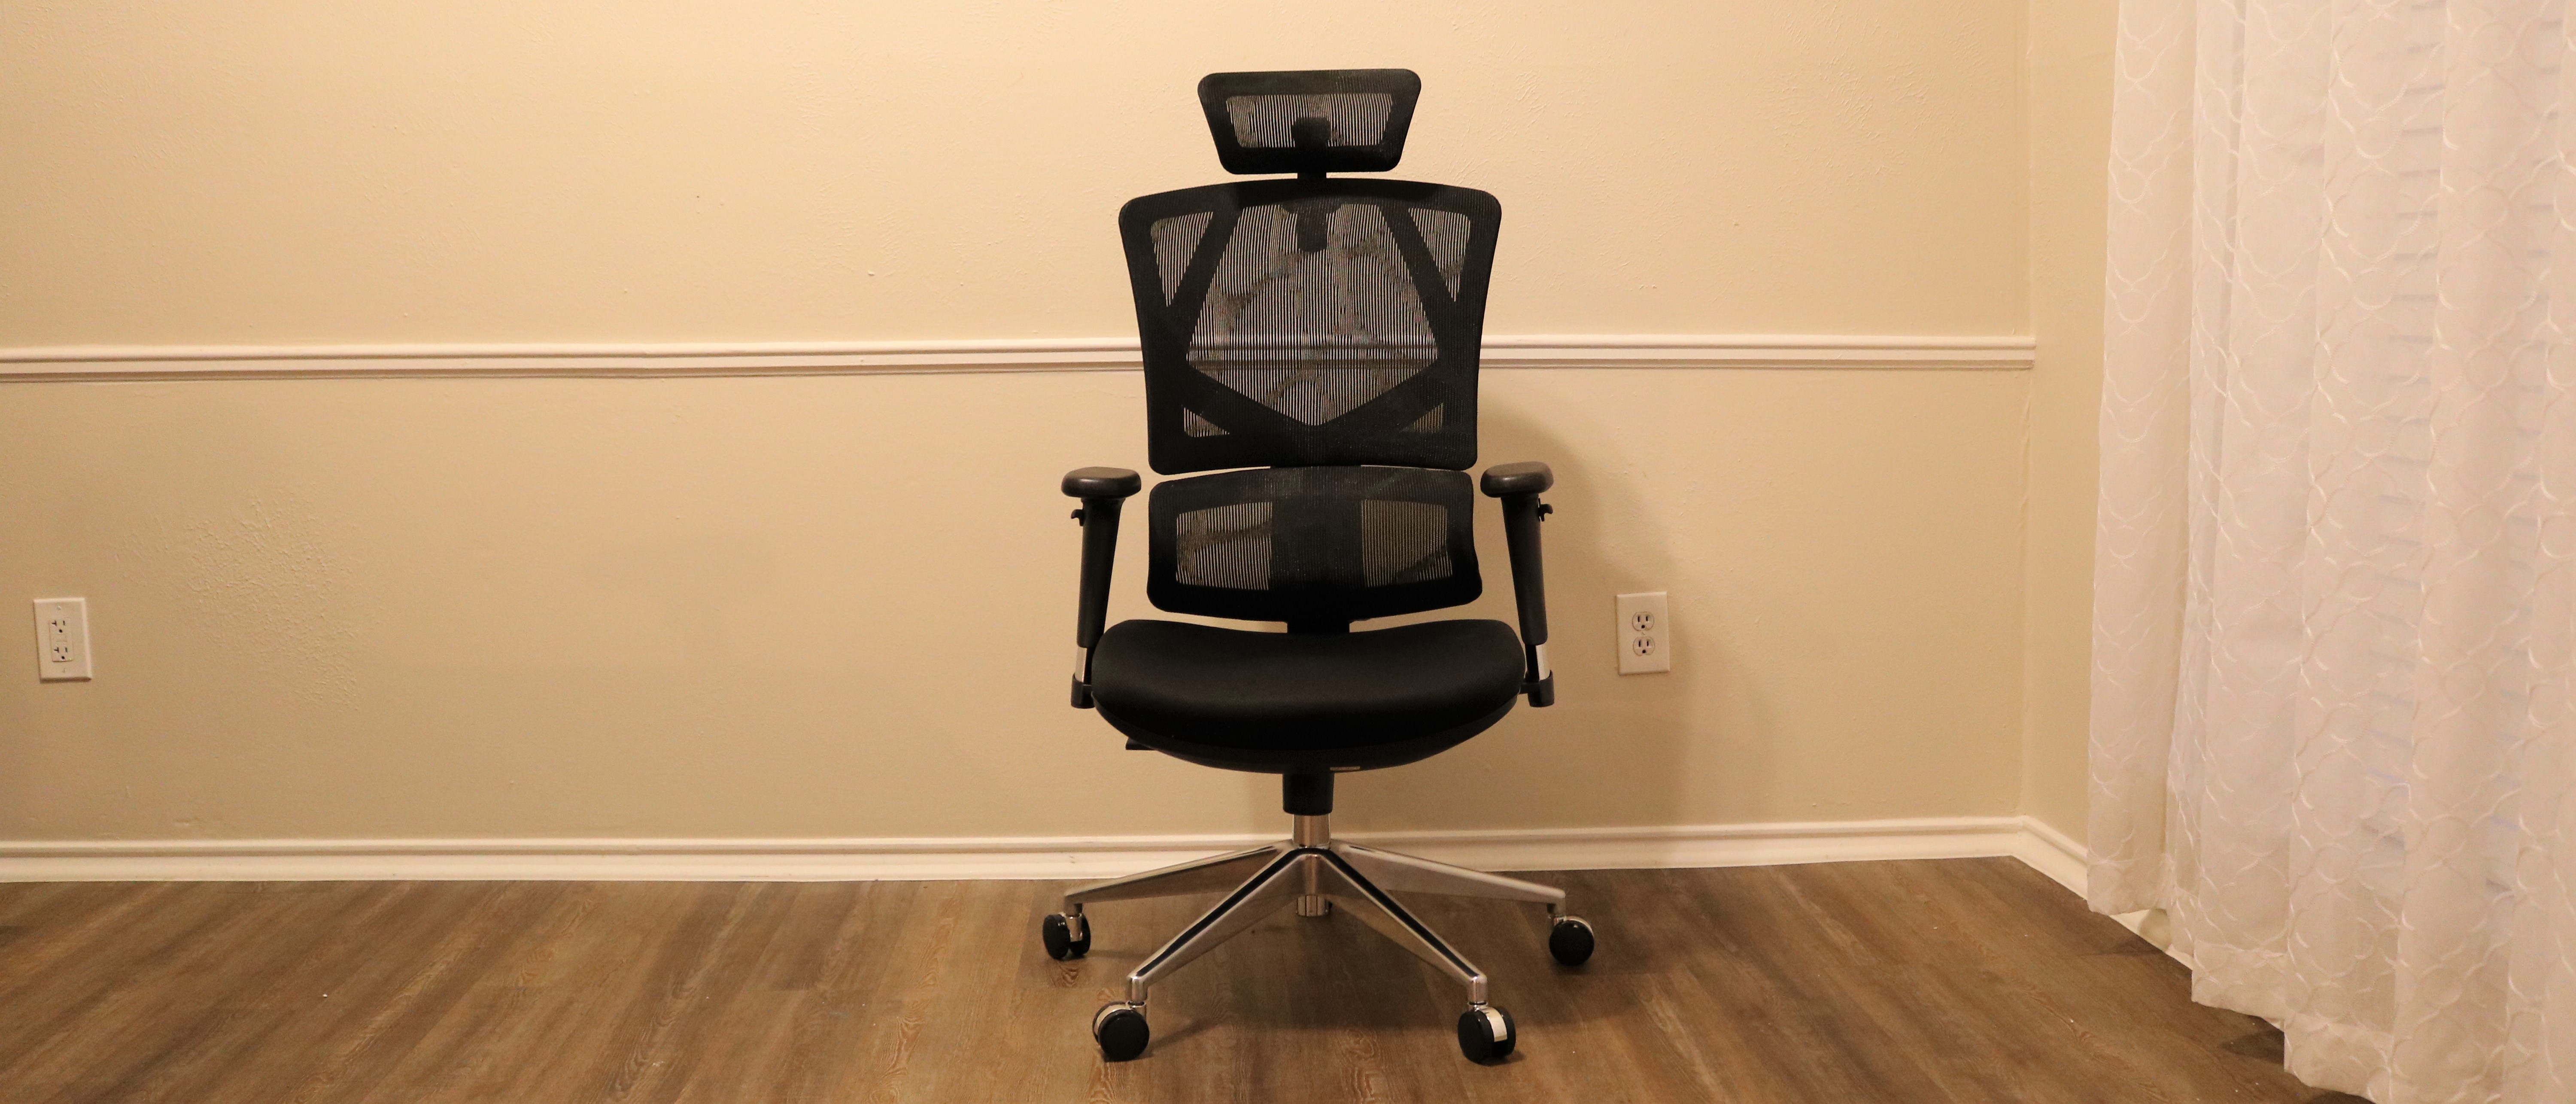 SIHOO M90D ergonomic office chair review